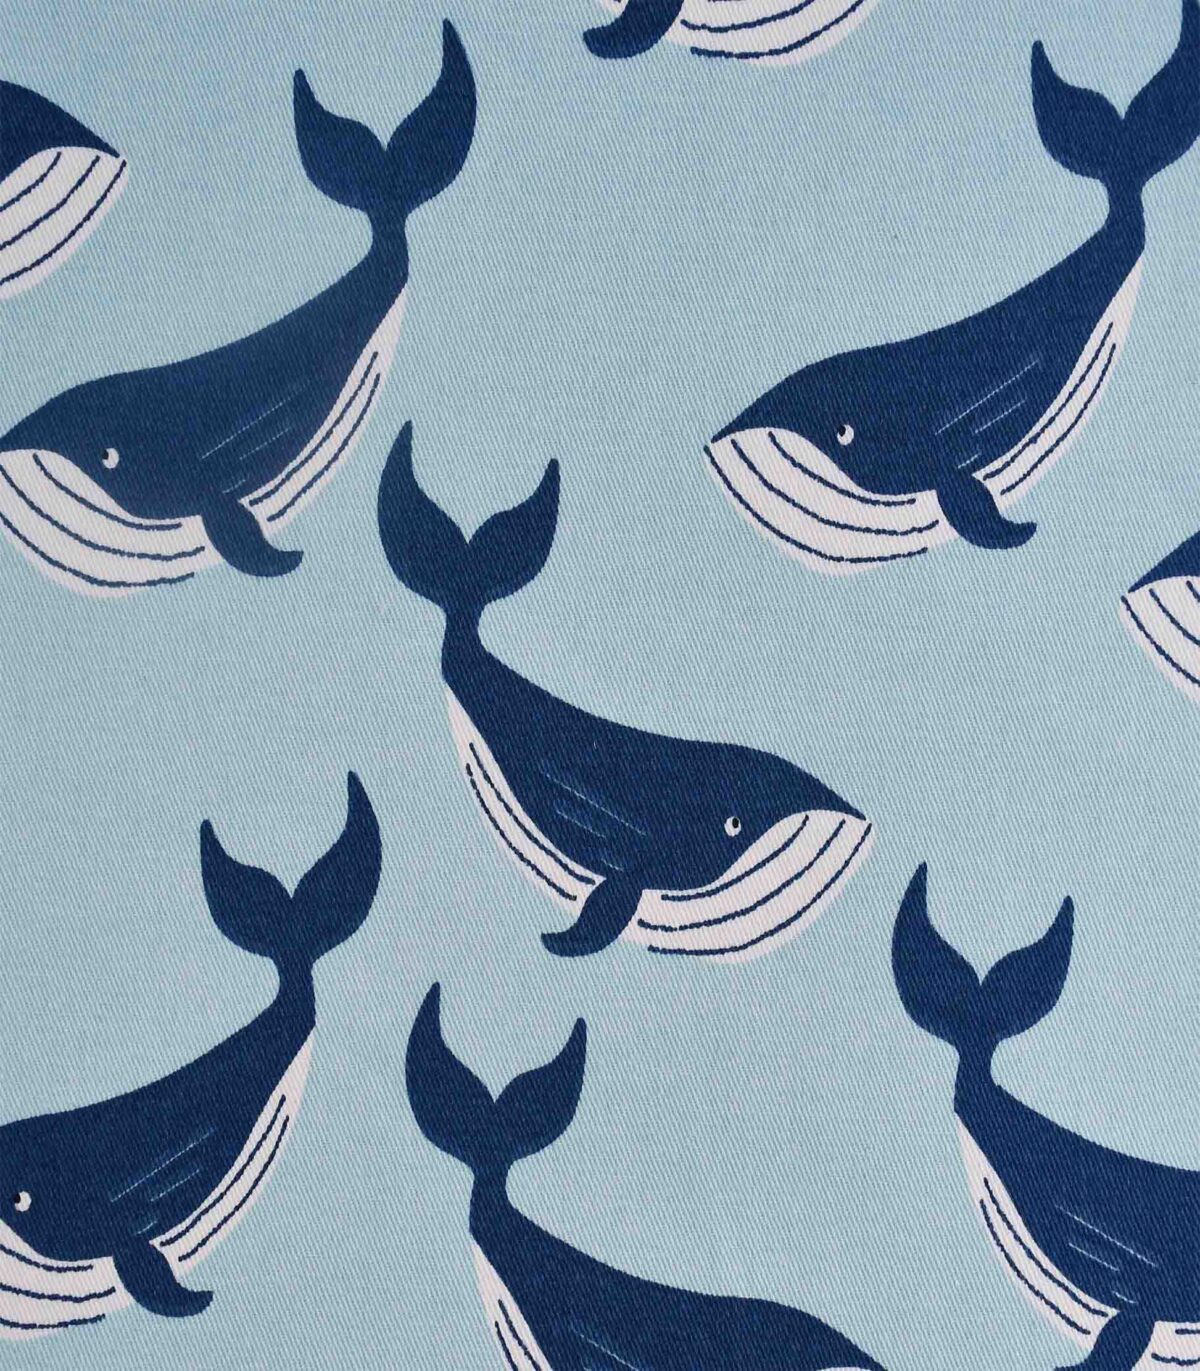 Cotton Dolphin Print Drill Fabric